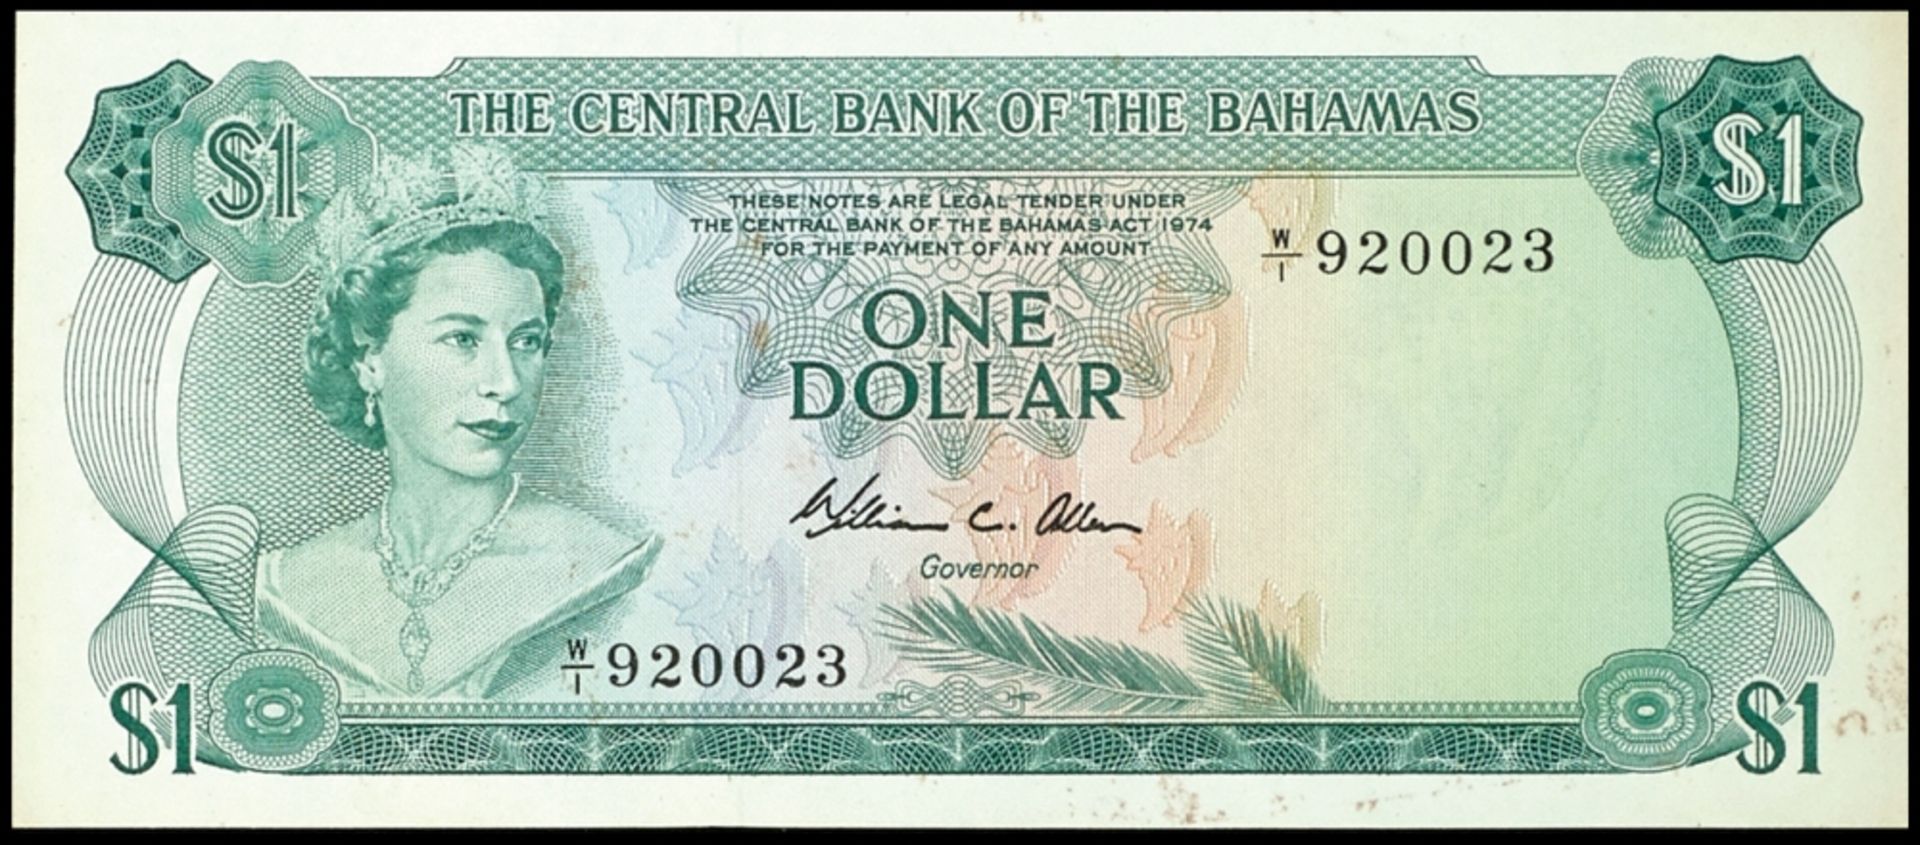 Bahamas, The Central Bank of the Bahamas, 1 Dollar 1974, P-35b, Erh. I.